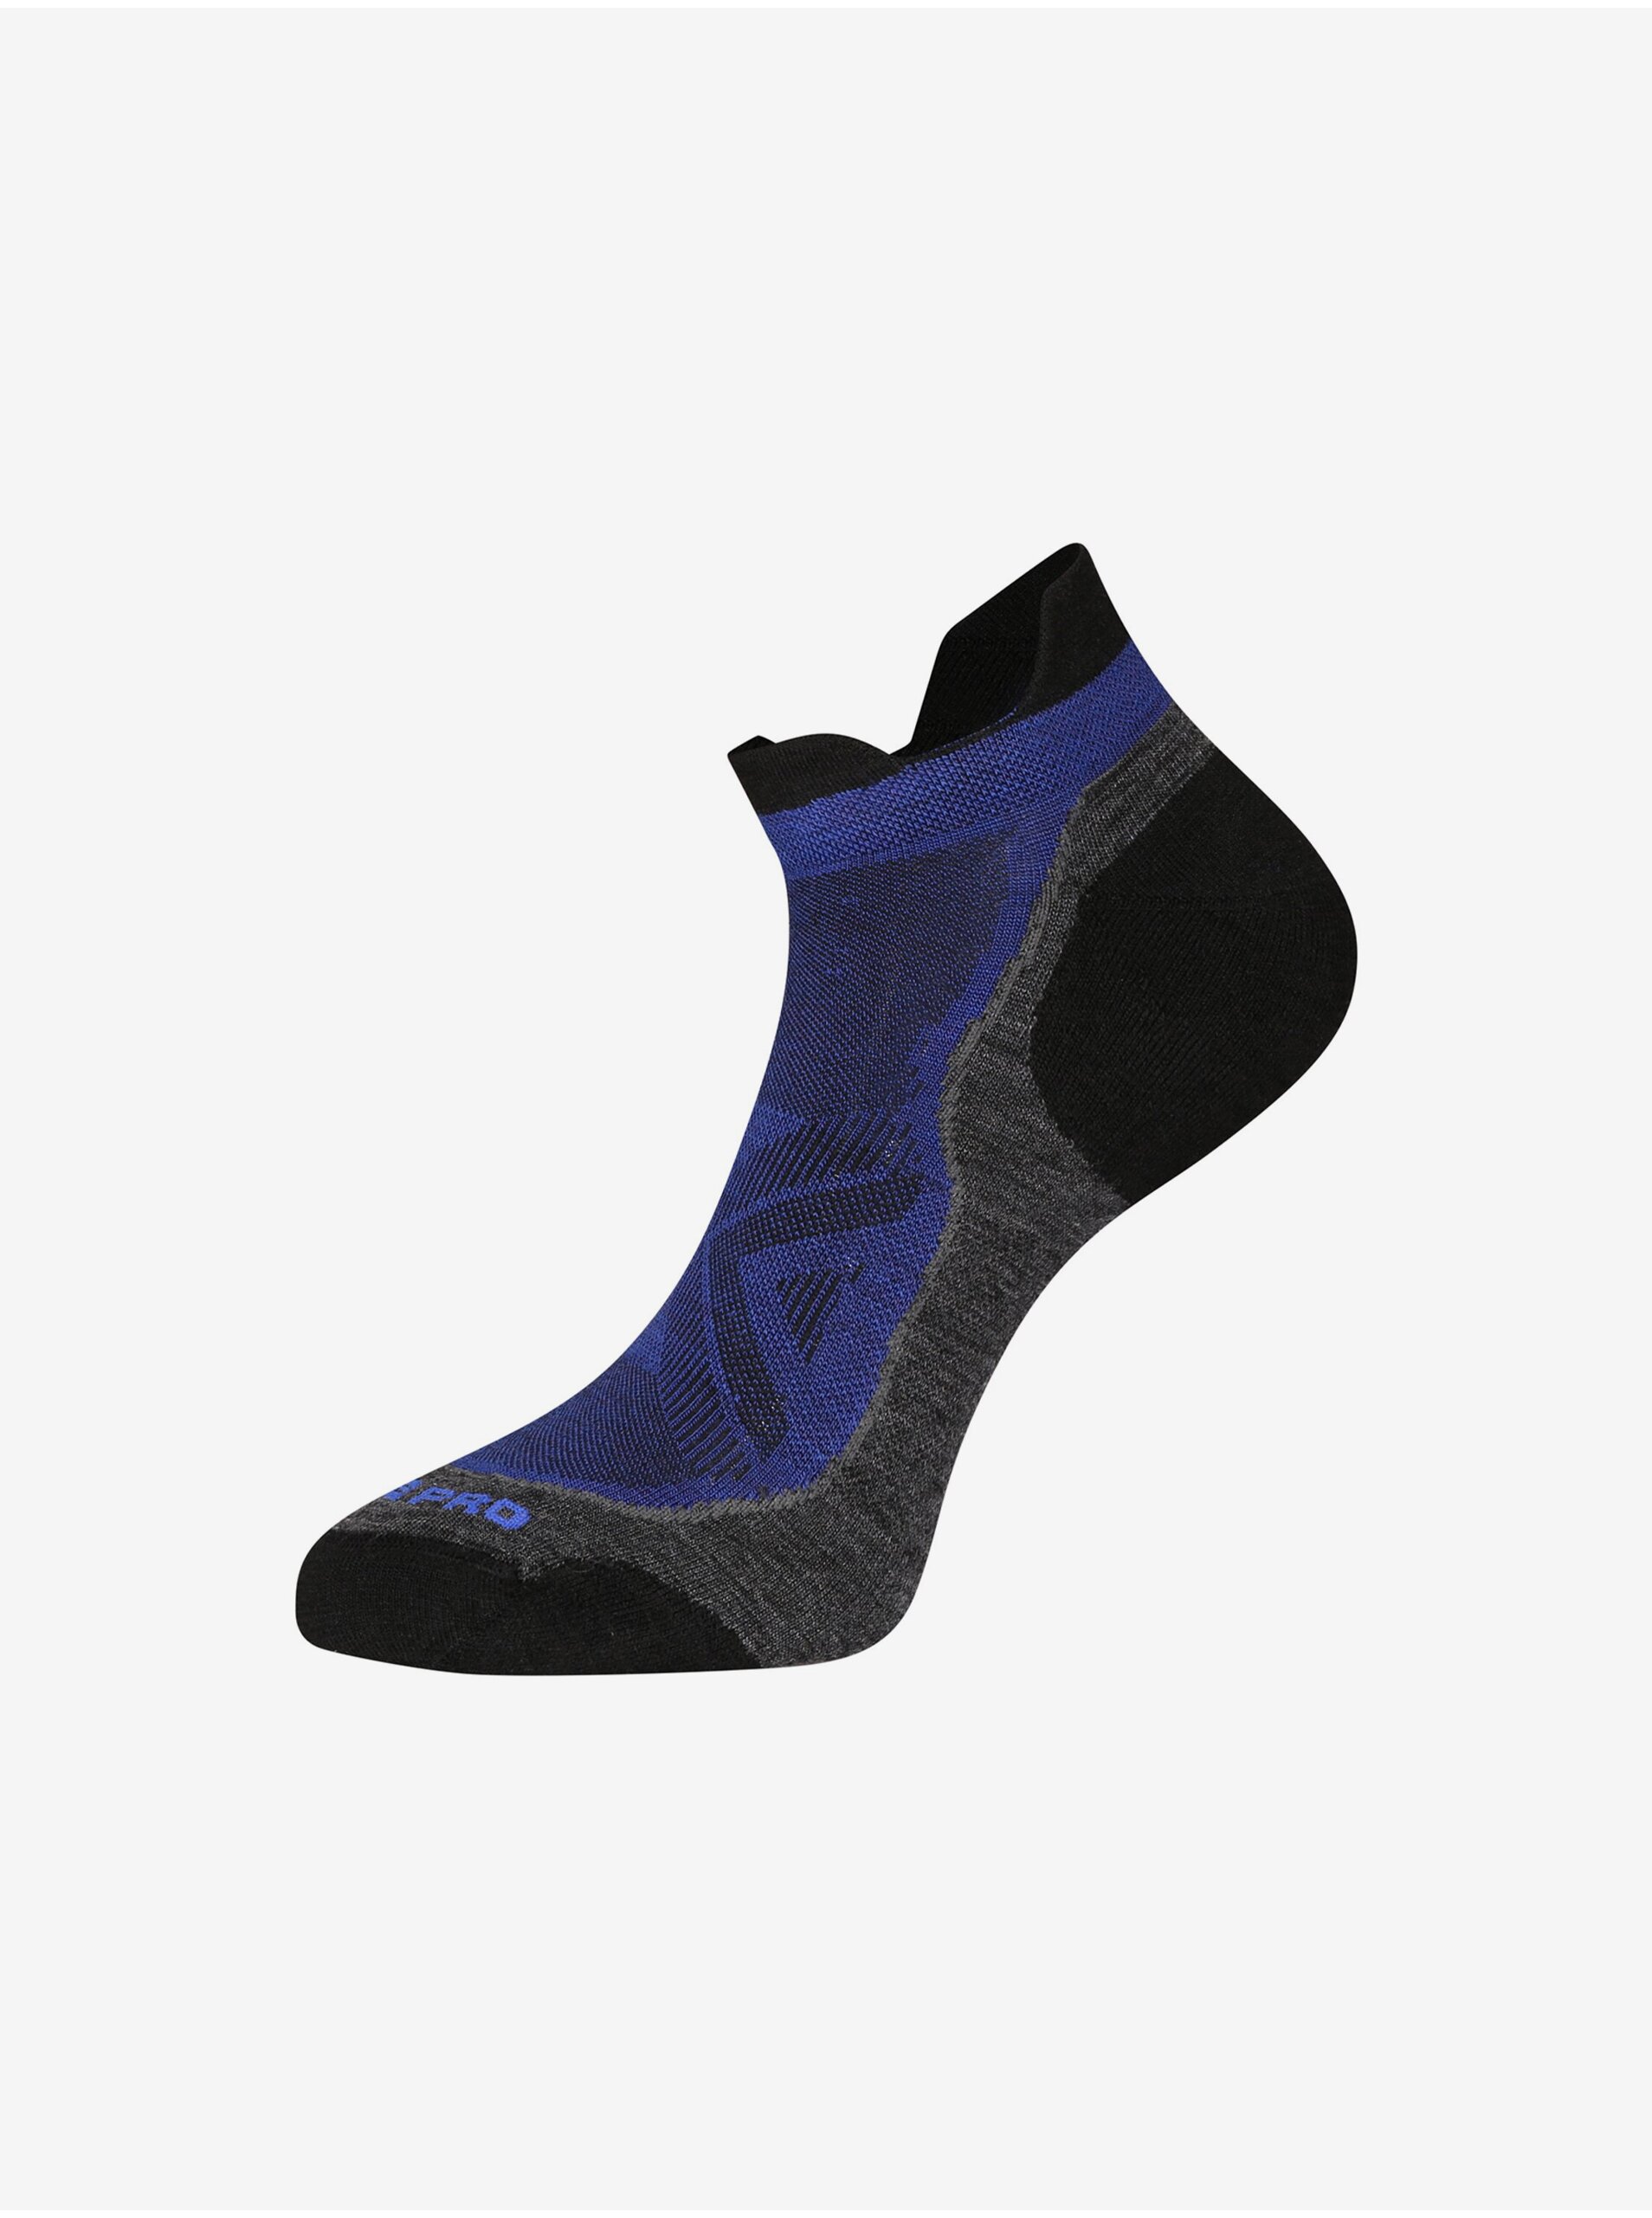 Lacno Modré ponožky z merino vlny ALPINE PRO Werde